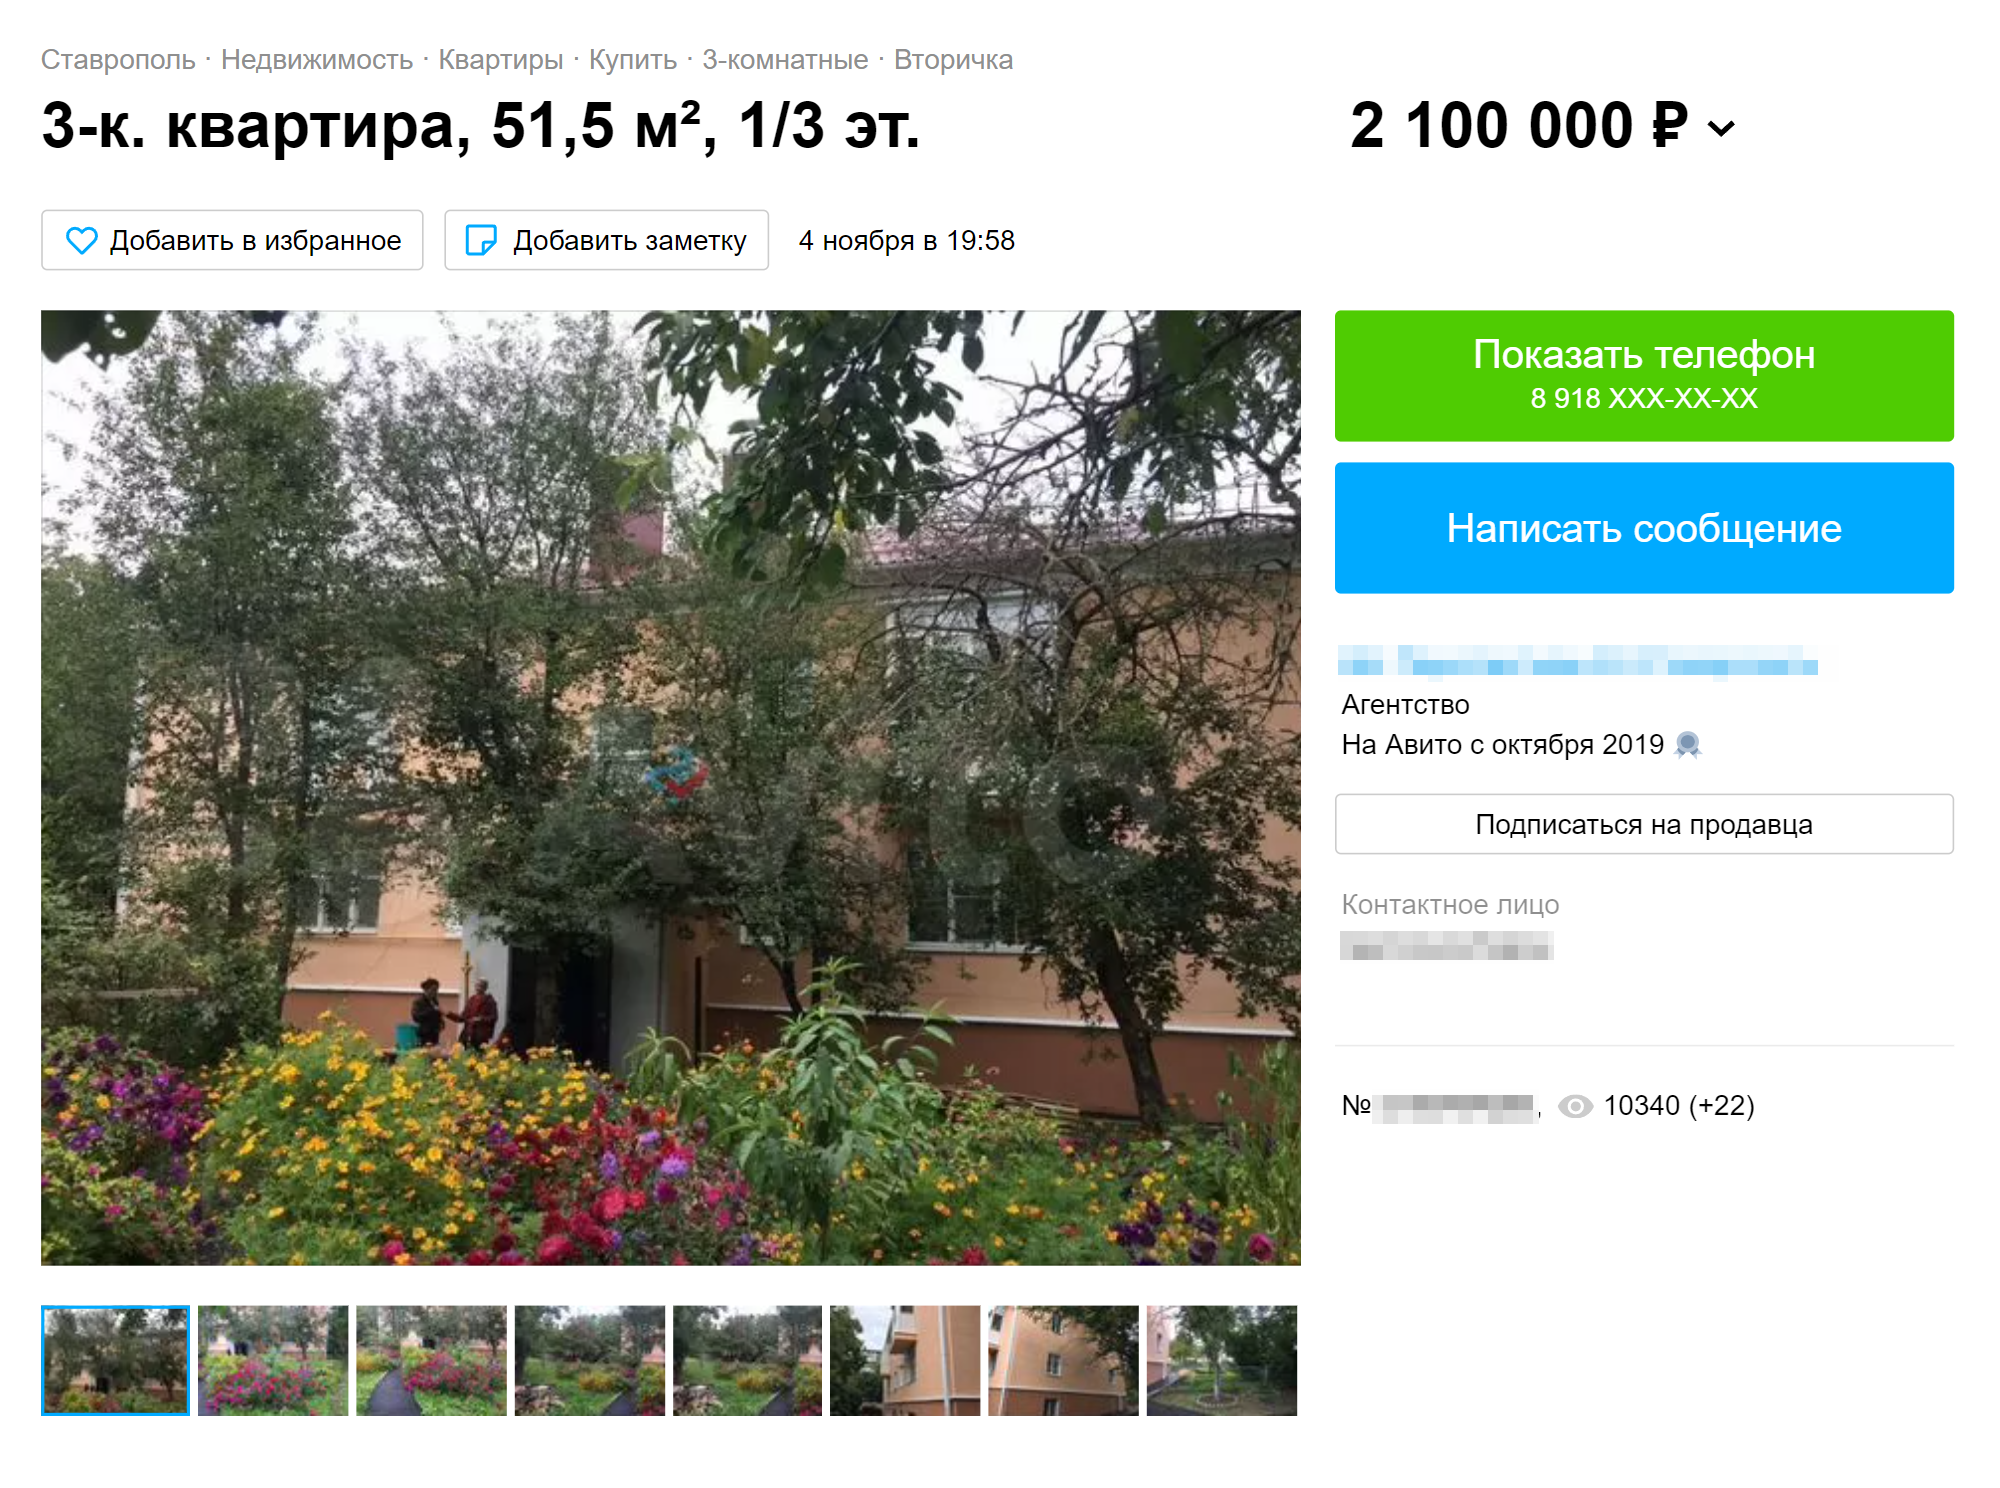 Трехкомнатная квартира — 2,1 млн рублей